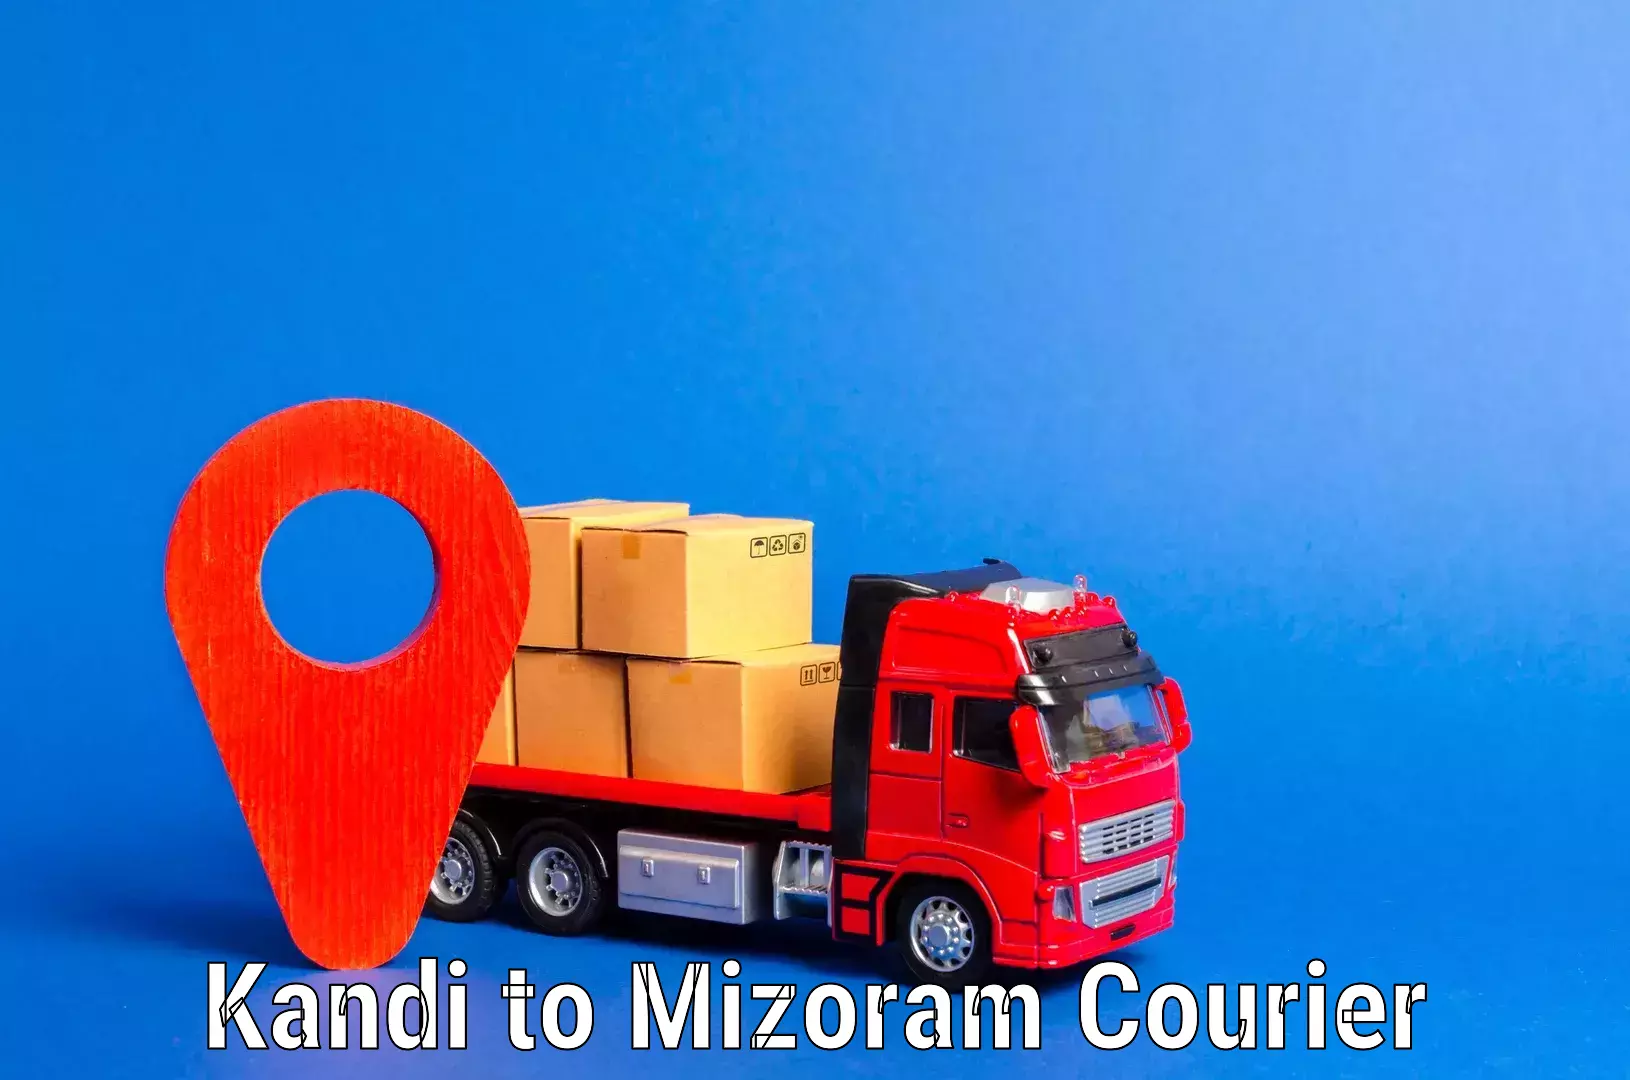 Trusted relocation experts Kandi to Mizoram